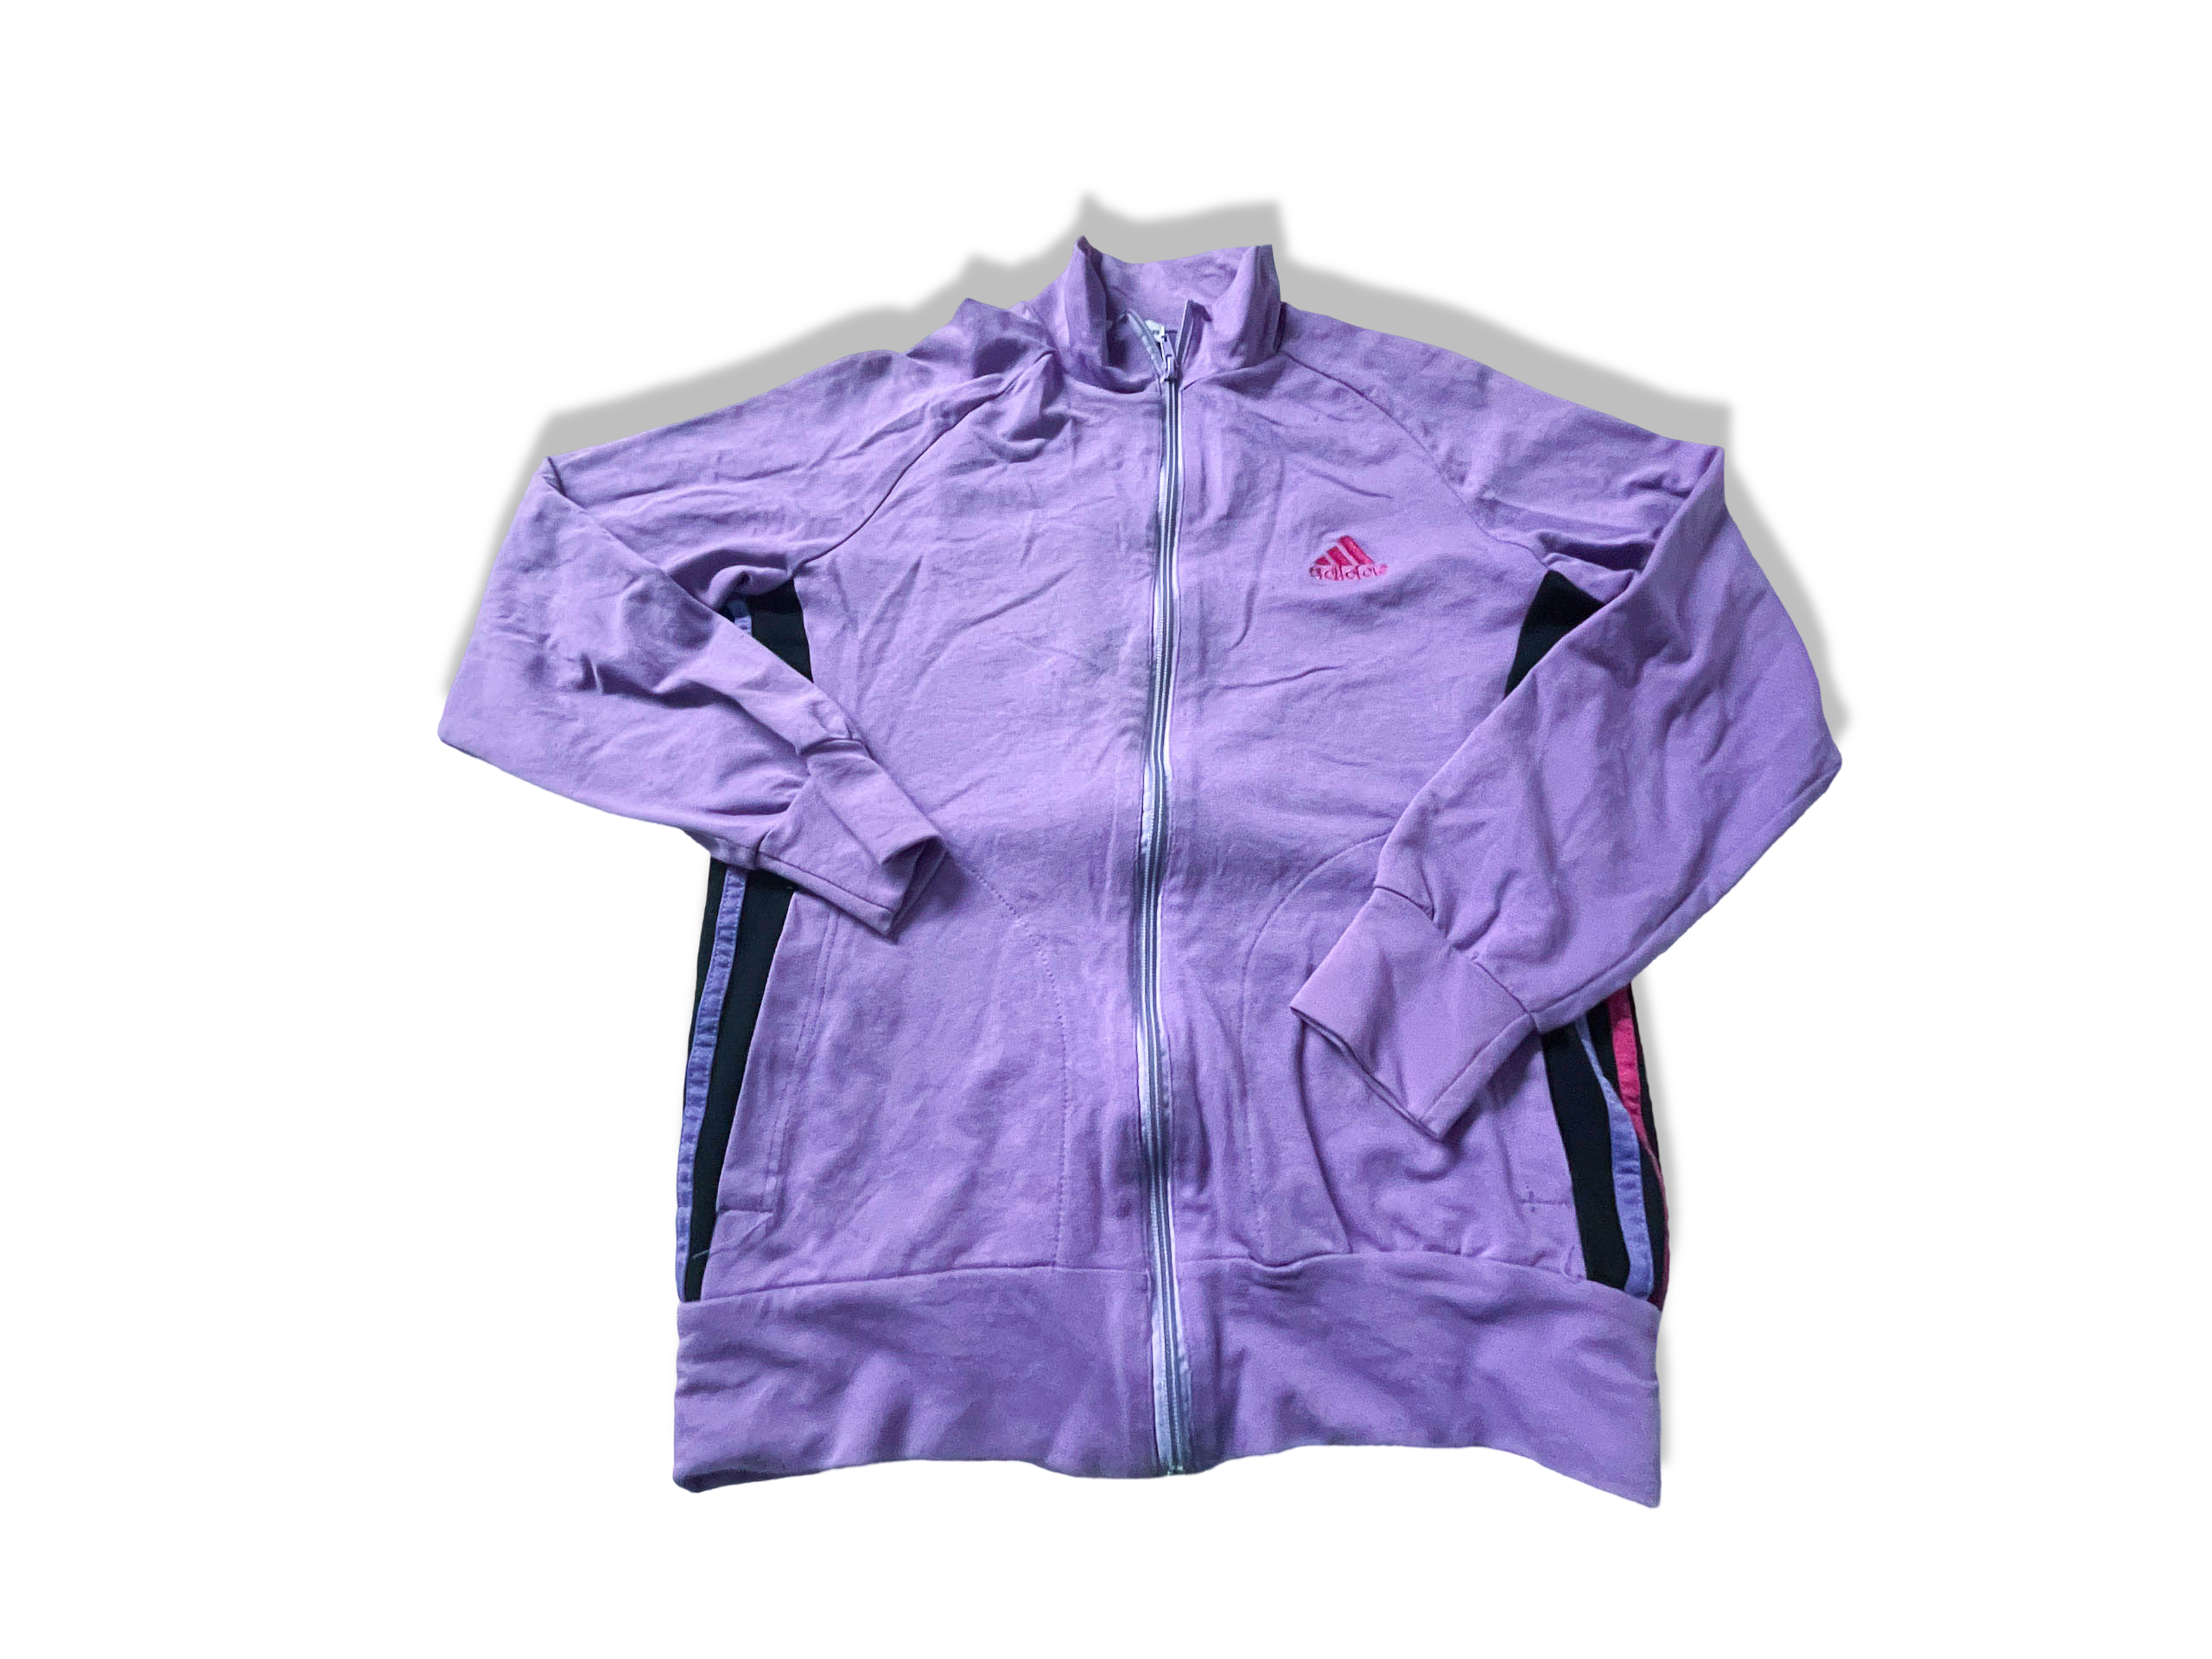 Vintage women's purple Adidas full zip high neck track top in M|L26 W17|SKU 3913